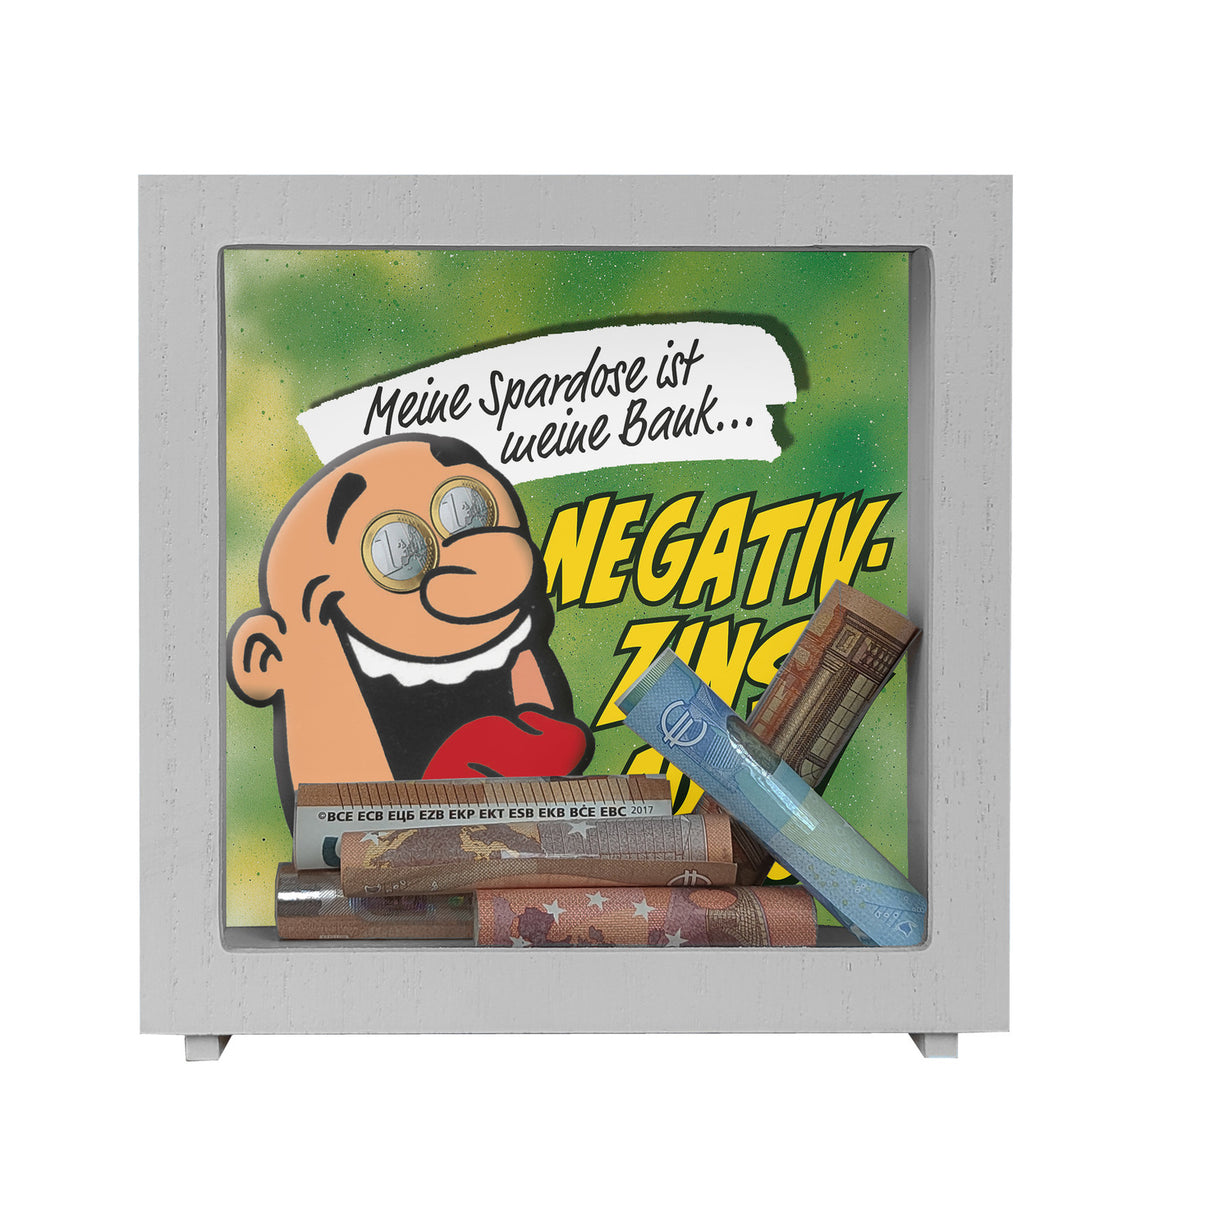 Spardose zum Thema Negativzins mit Comic-Motiv